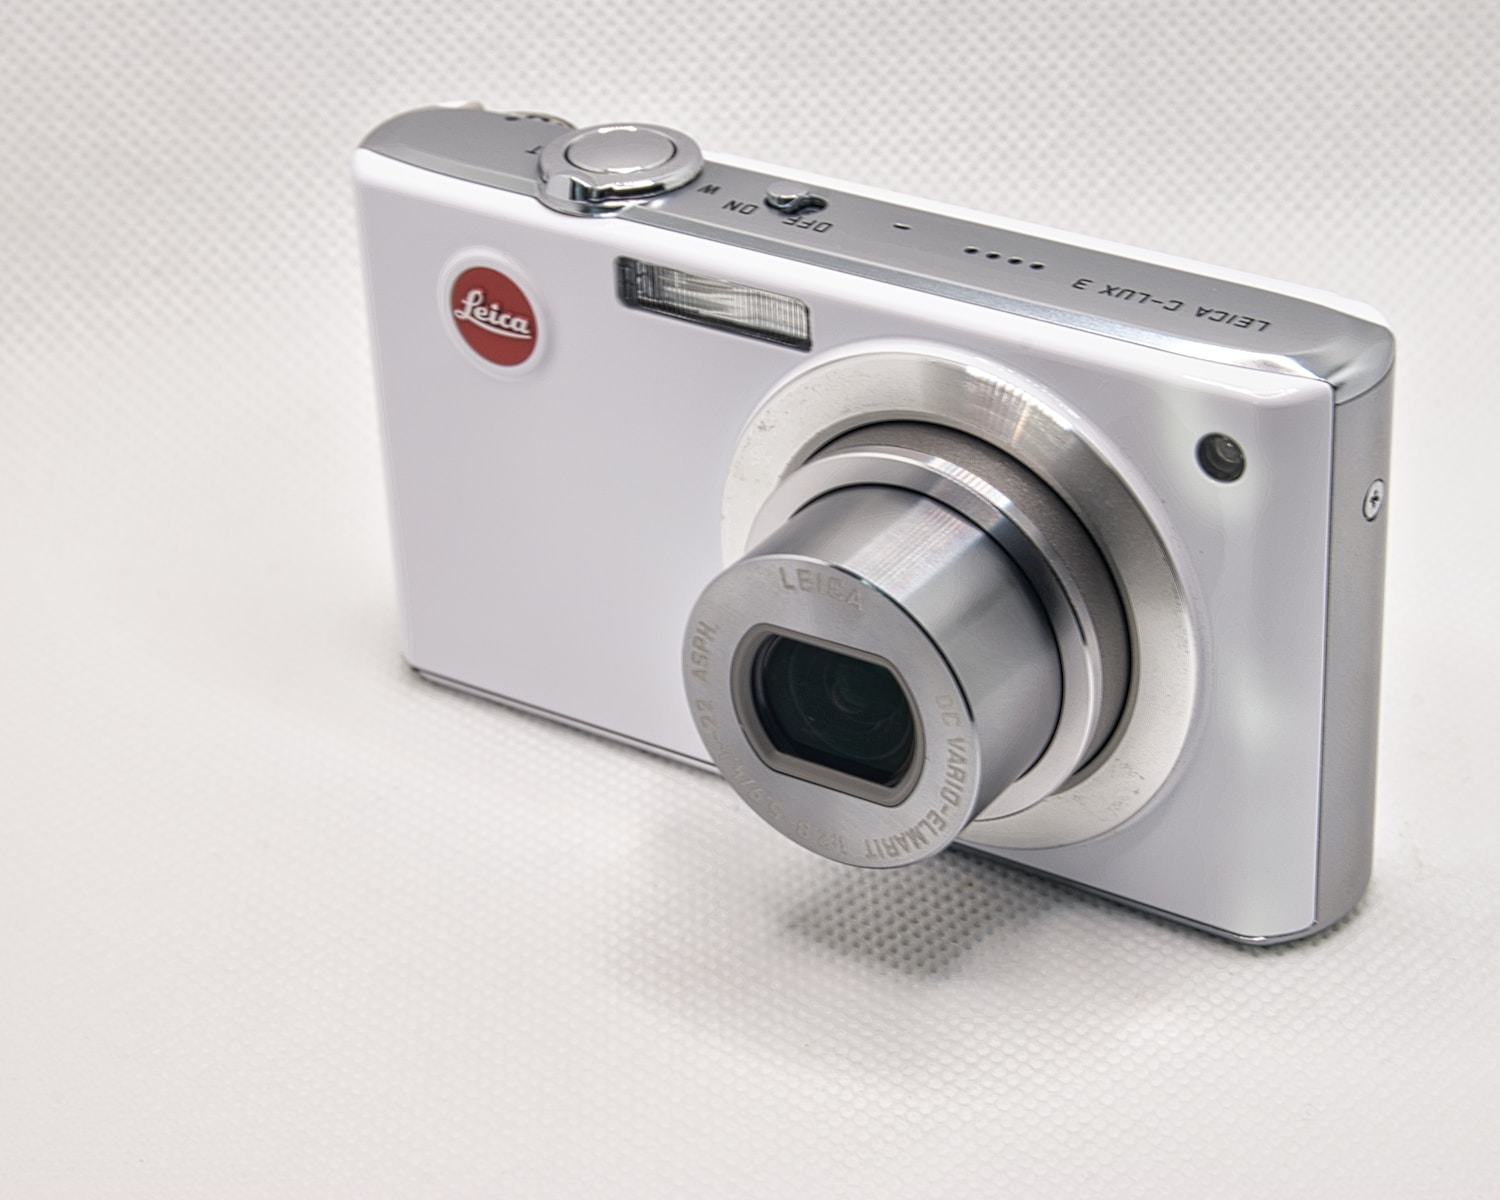 a white camera with a black lens